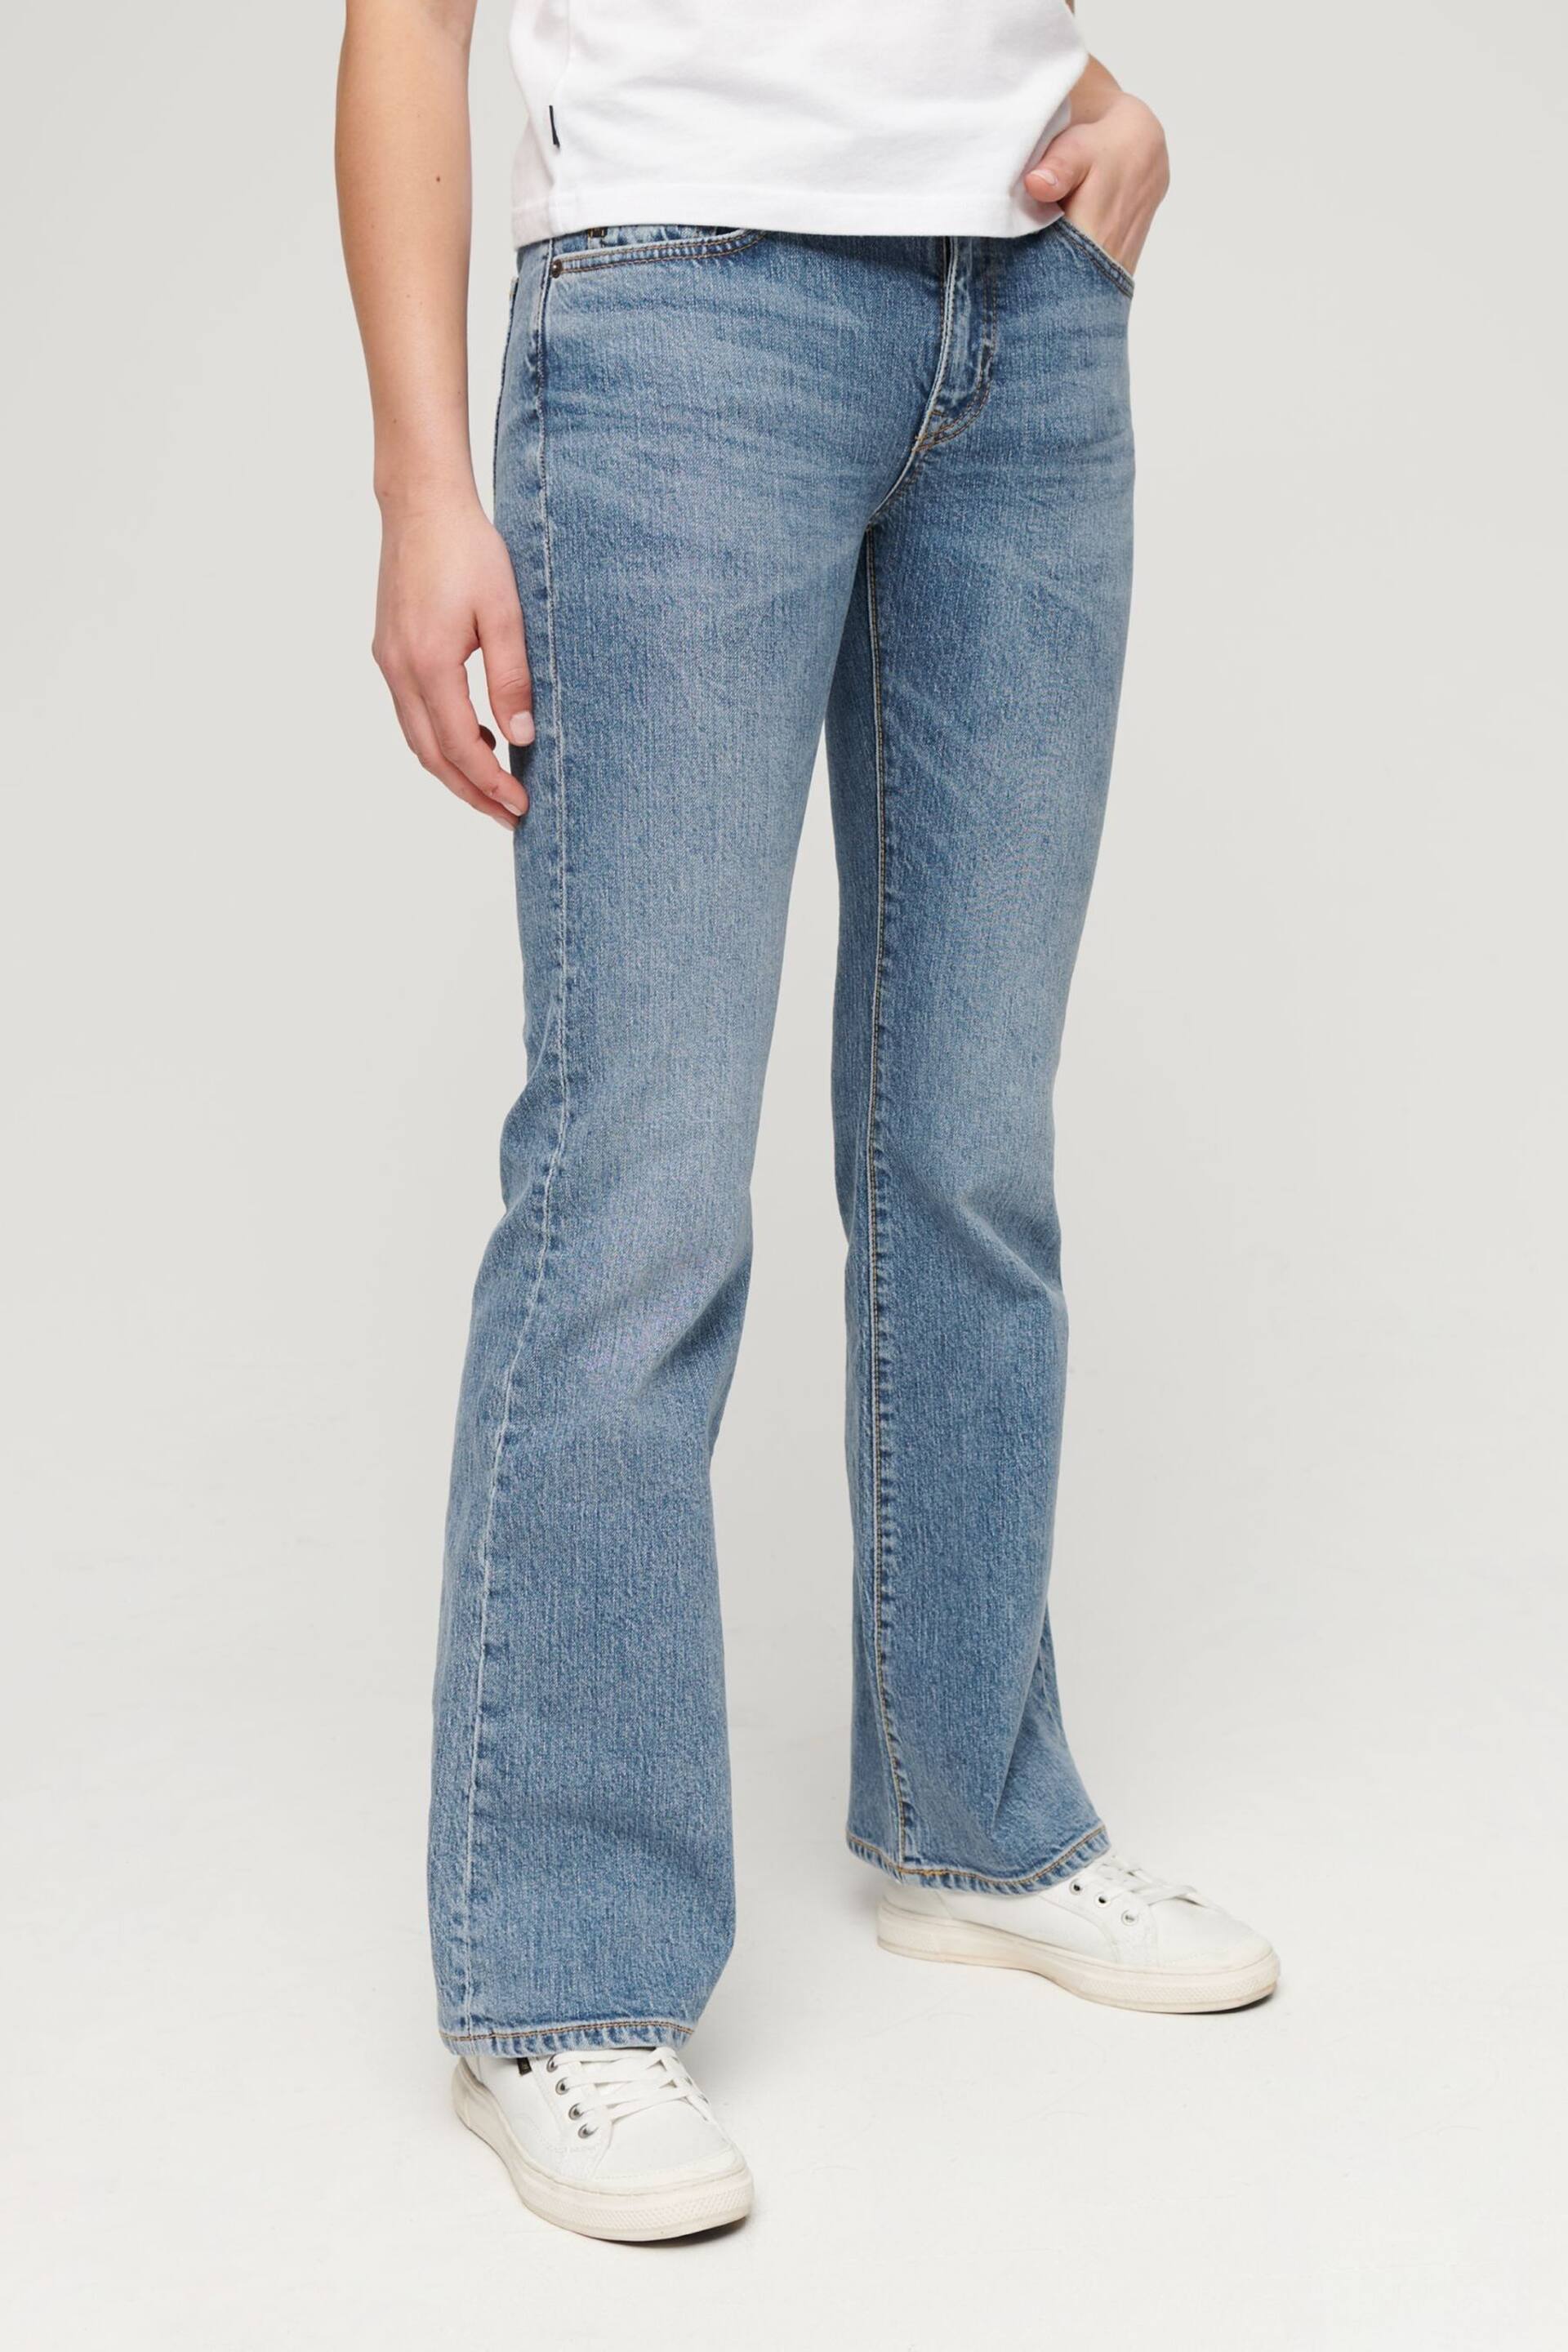 Superdry Light Blue Mid Rise Slim Flare Jeans - Image 1 of 7